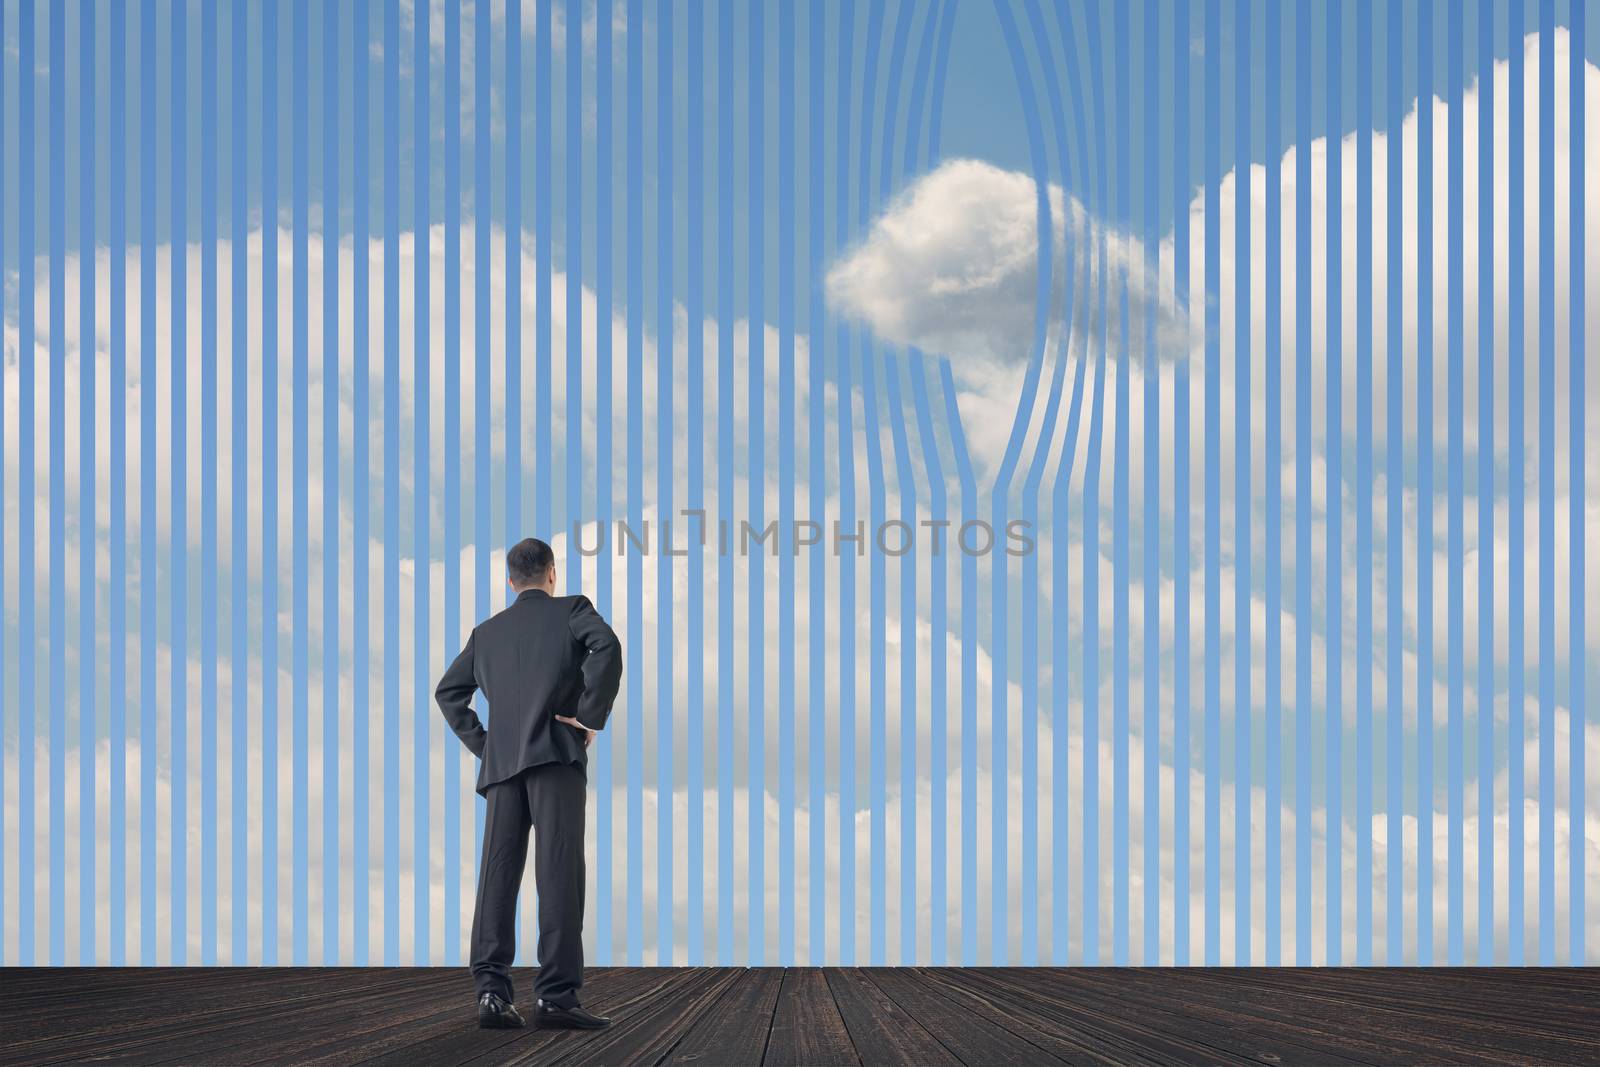 Concept of clouds, escape, idea, aspiration, wish etc.